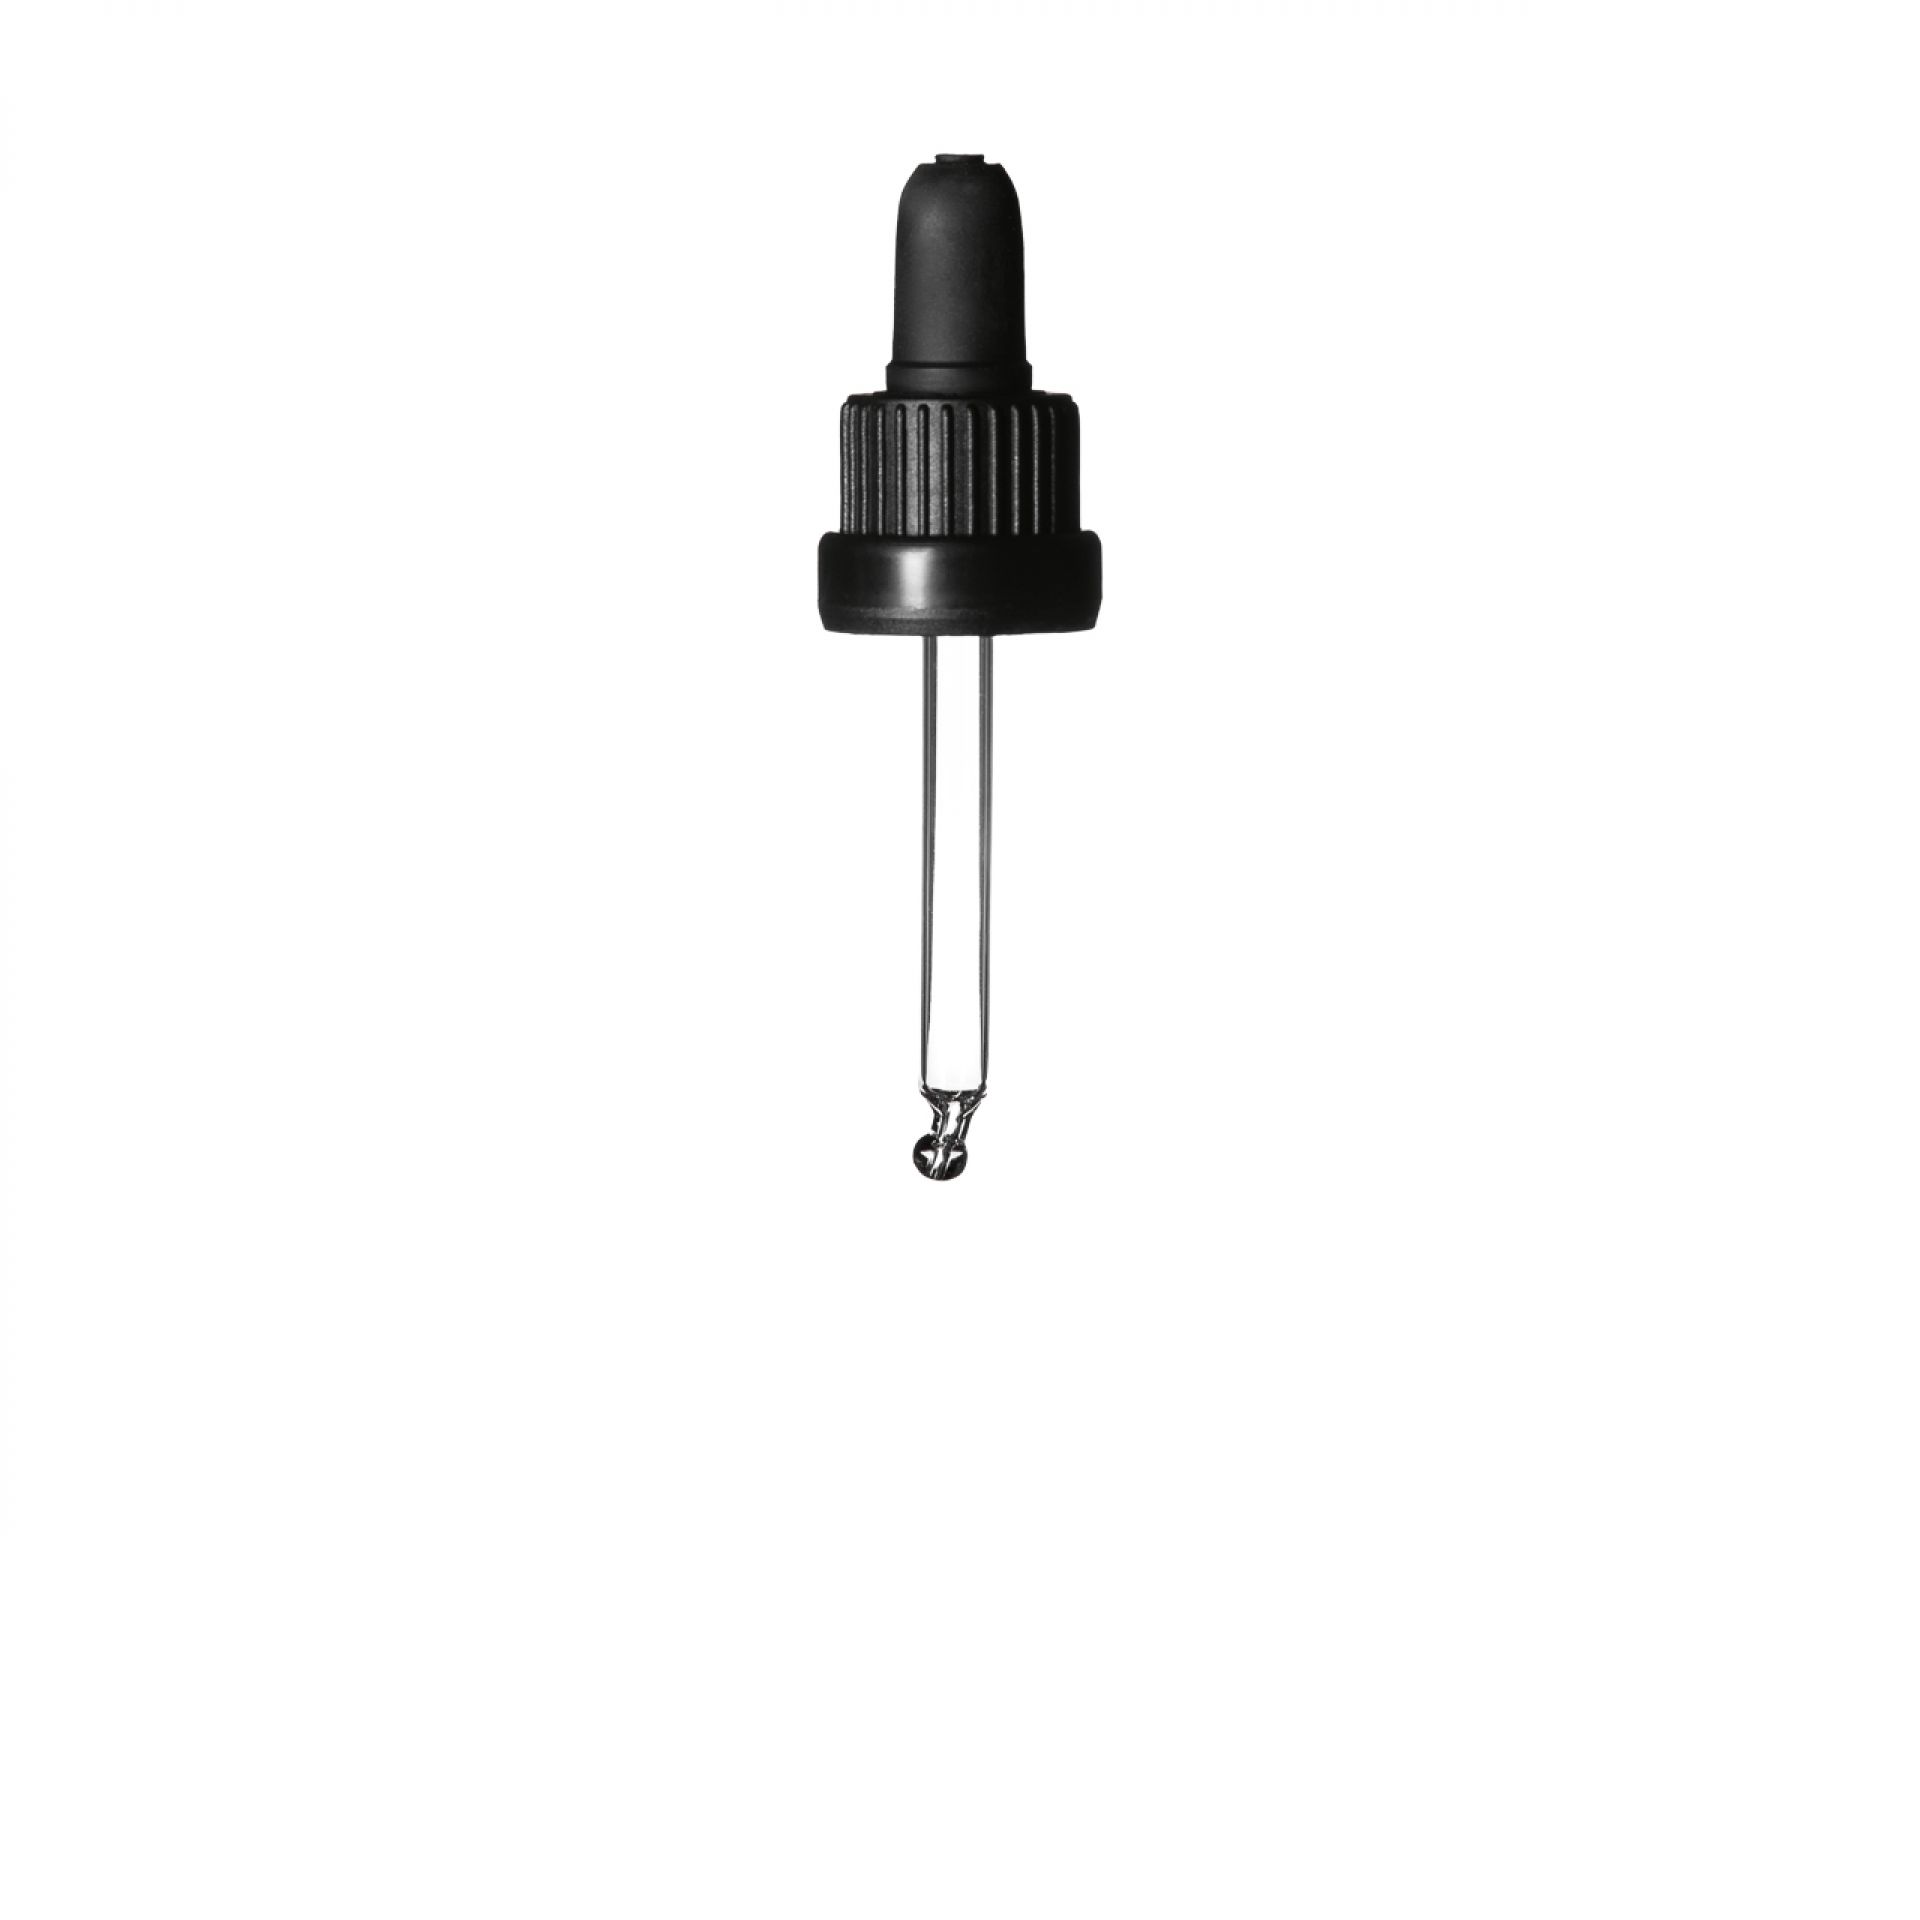 Pipette tamper evident DIN18, III, black, ribbed, bulb TPE, dose 0.7ml, bent ball tip (Orion 20)